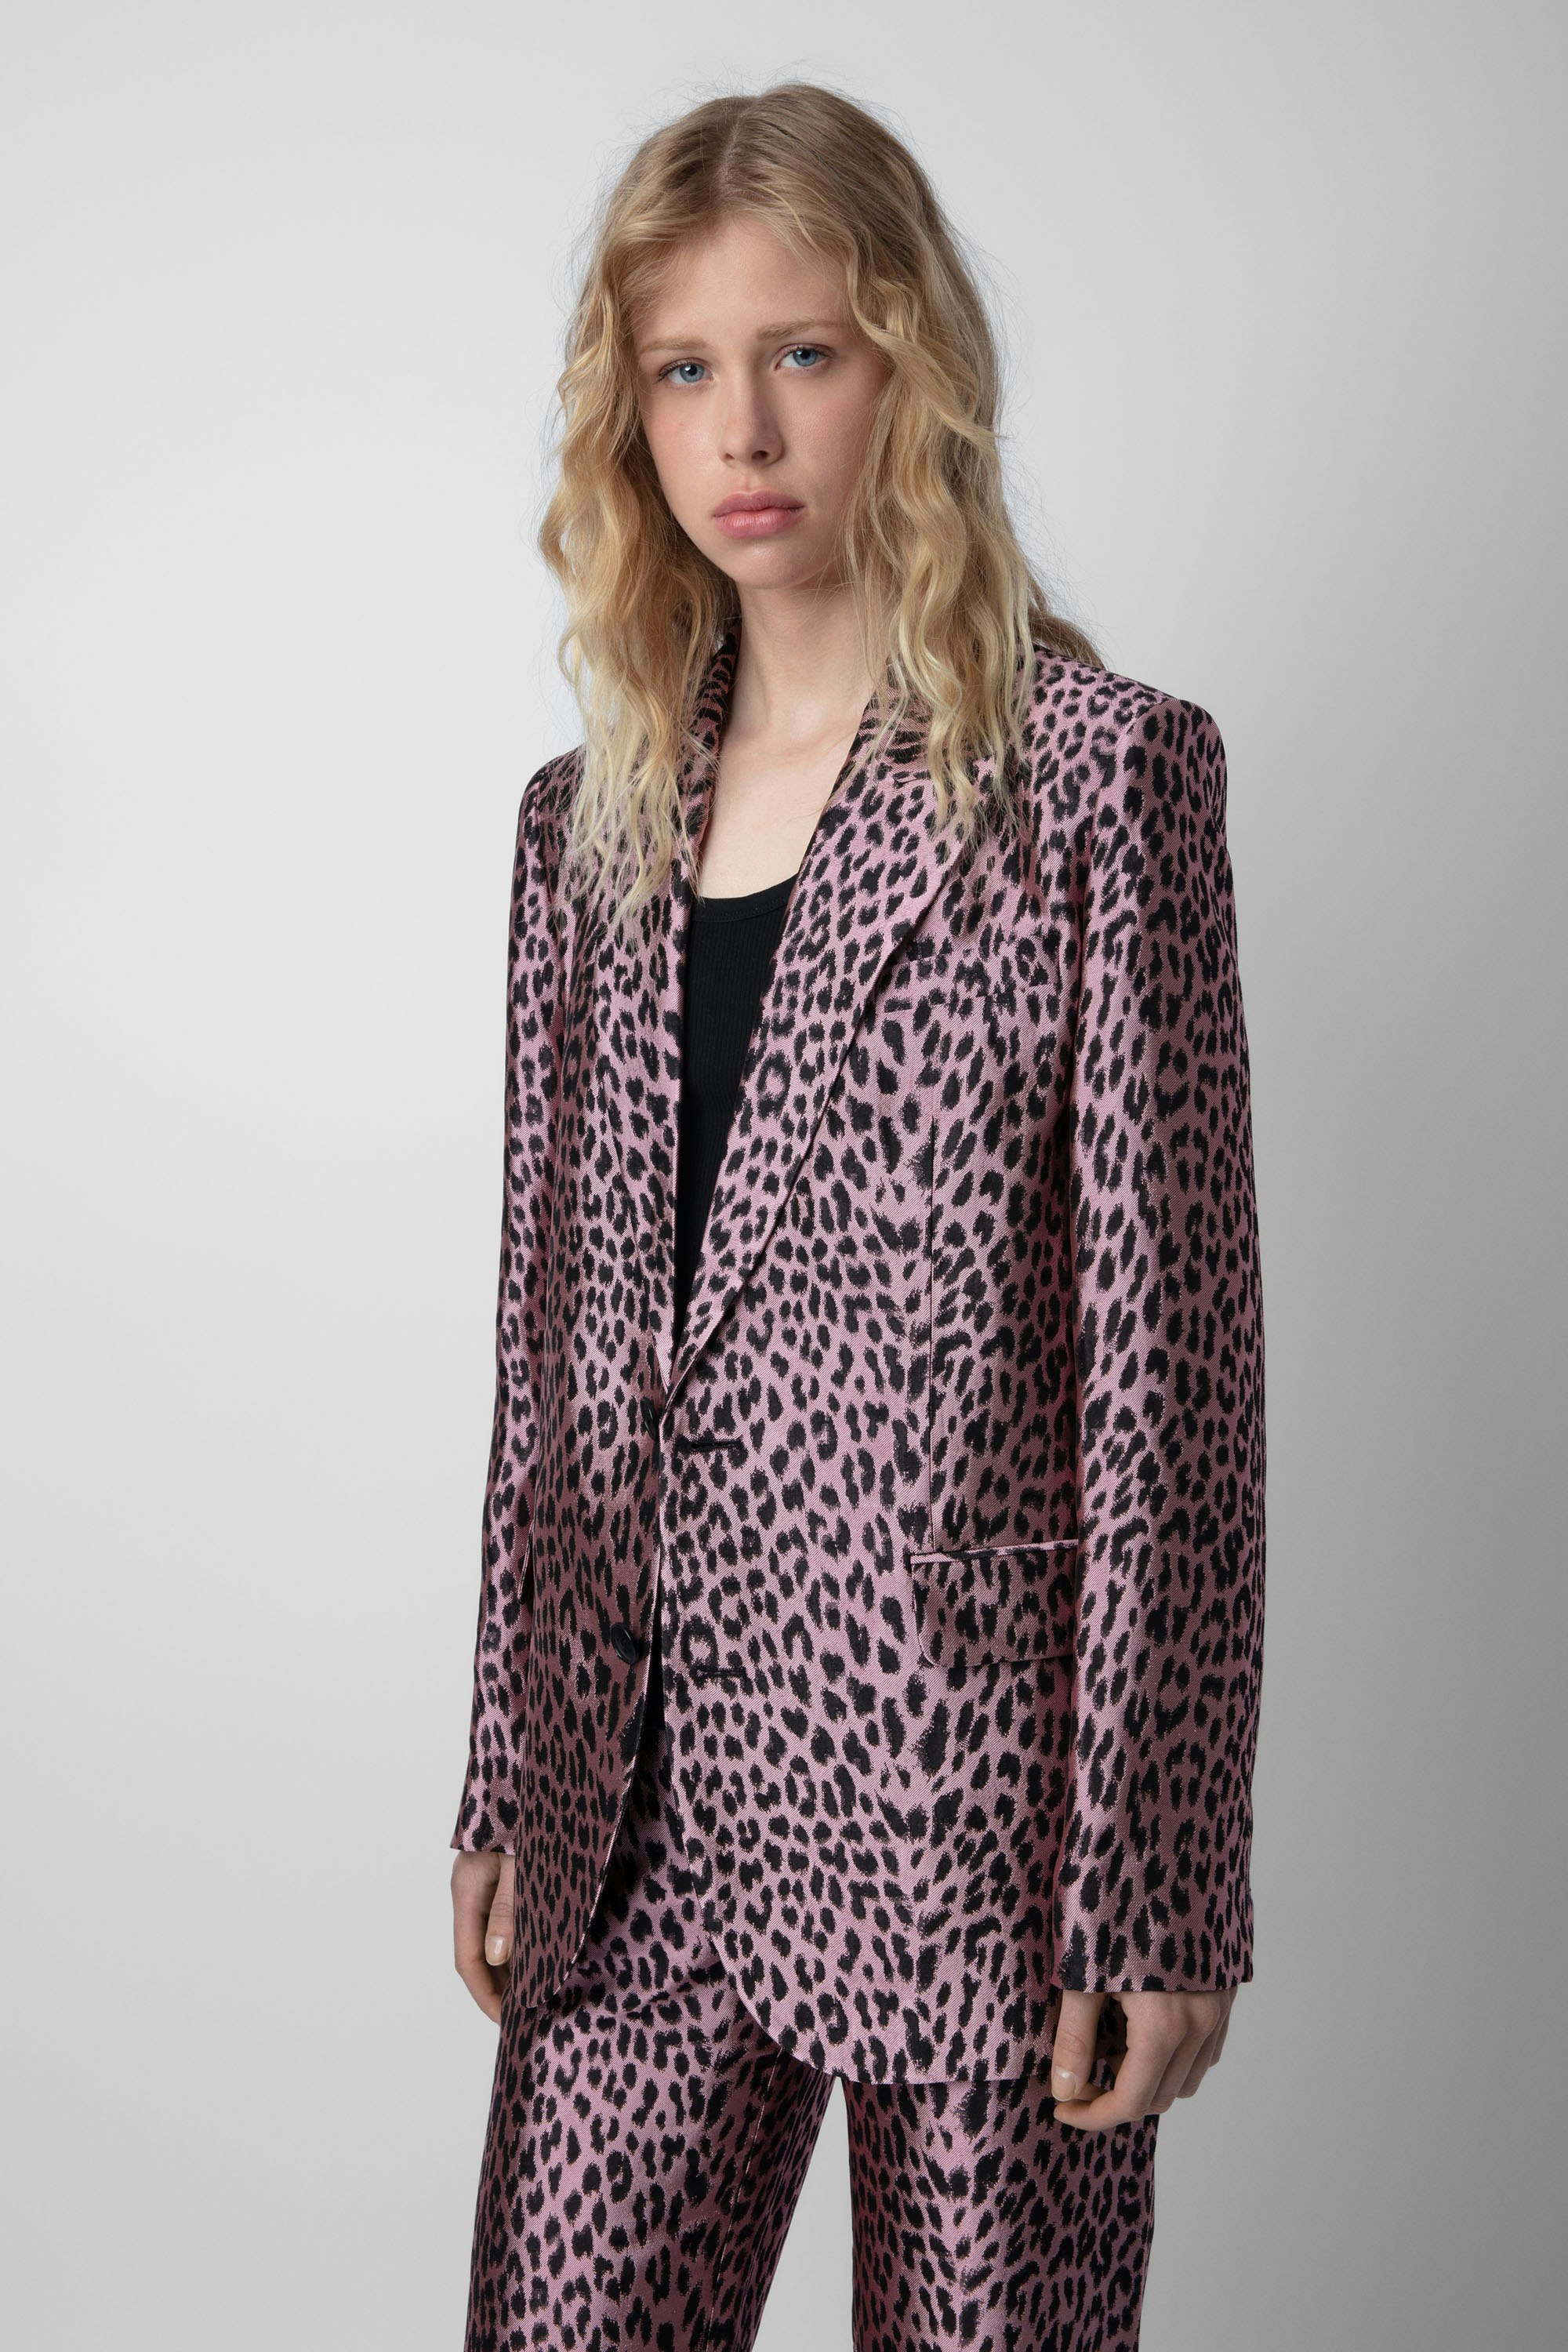 Vegy Leopard Jacquard Blazer - Women's pink leopard jacquard blazer.